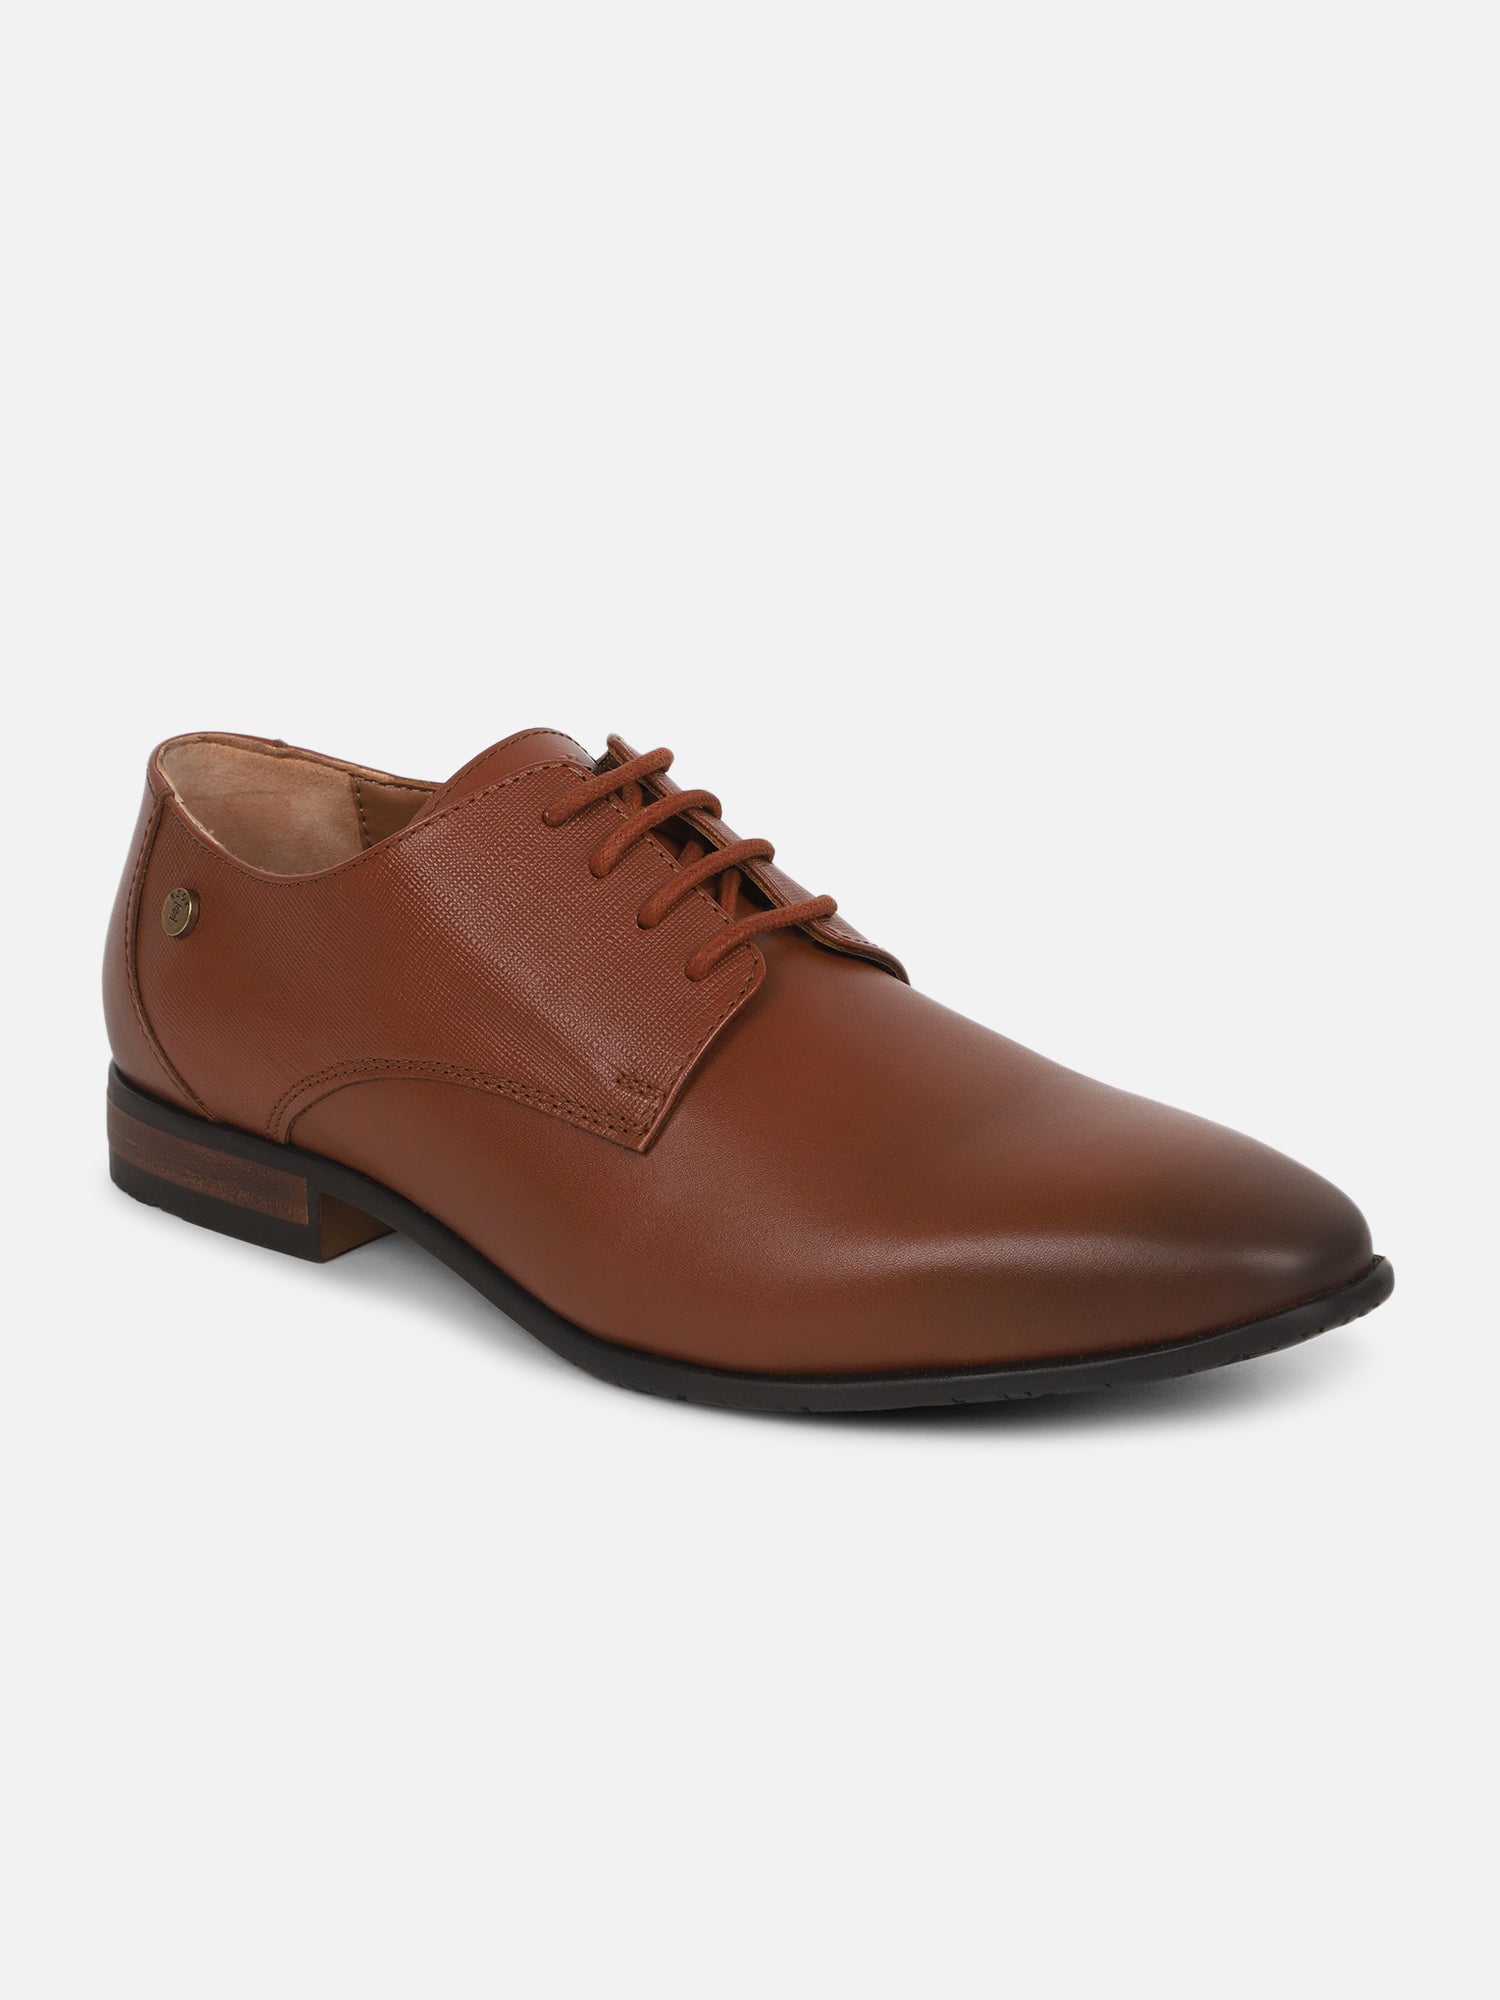 Ezok Men Formal Leather Shoes ( Tan )